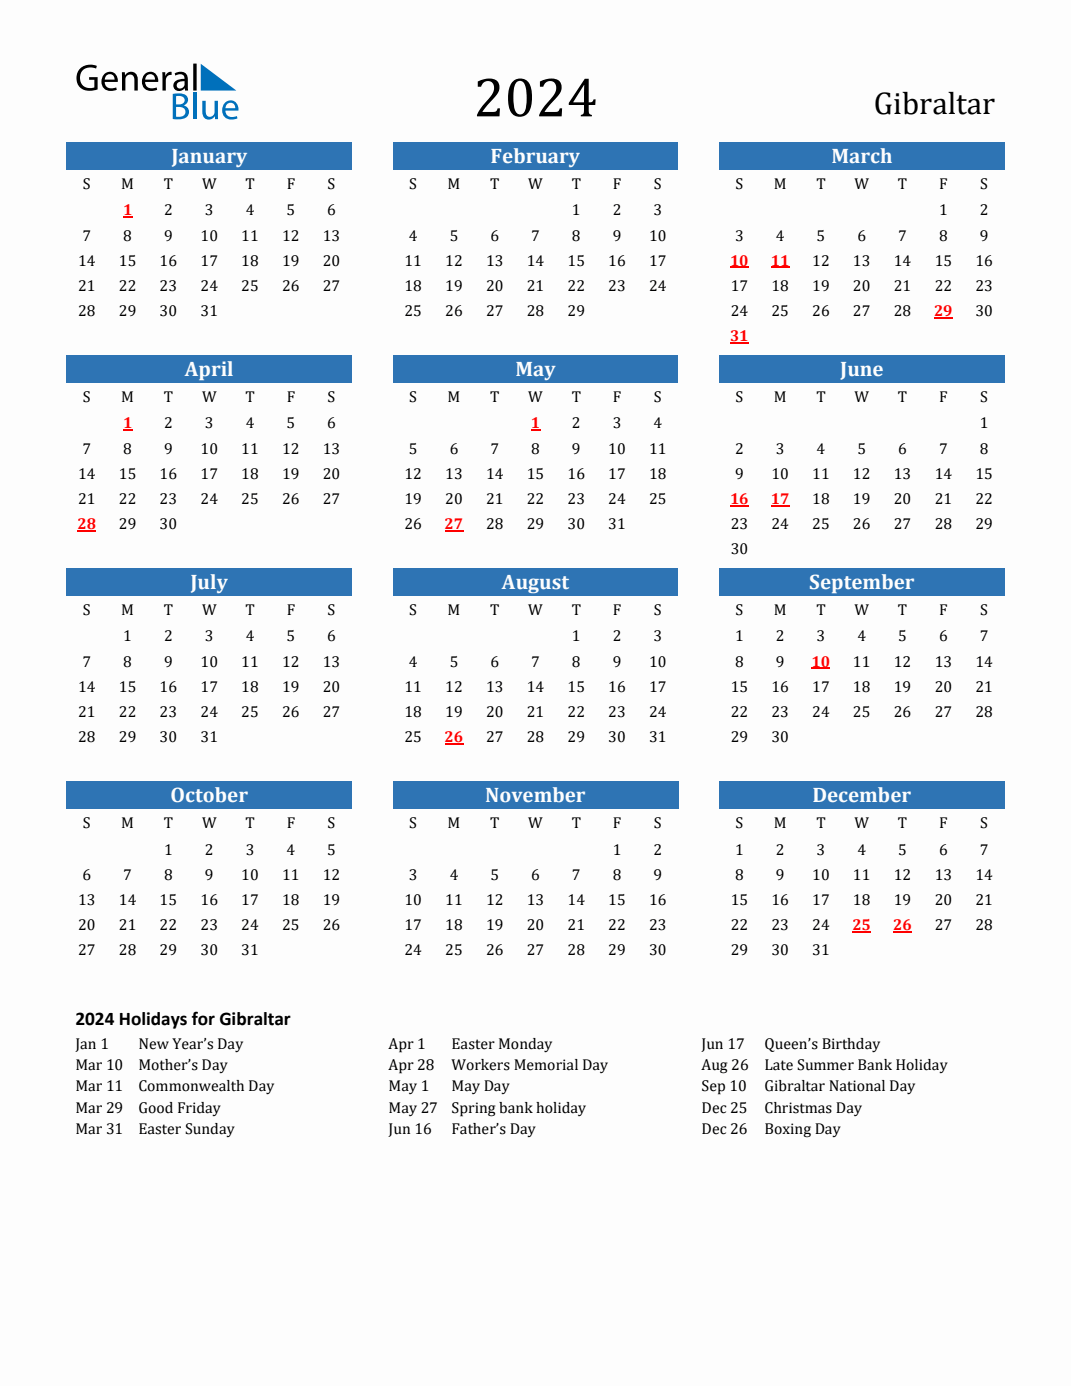 2024-gibraltar-calendar-with-holidays